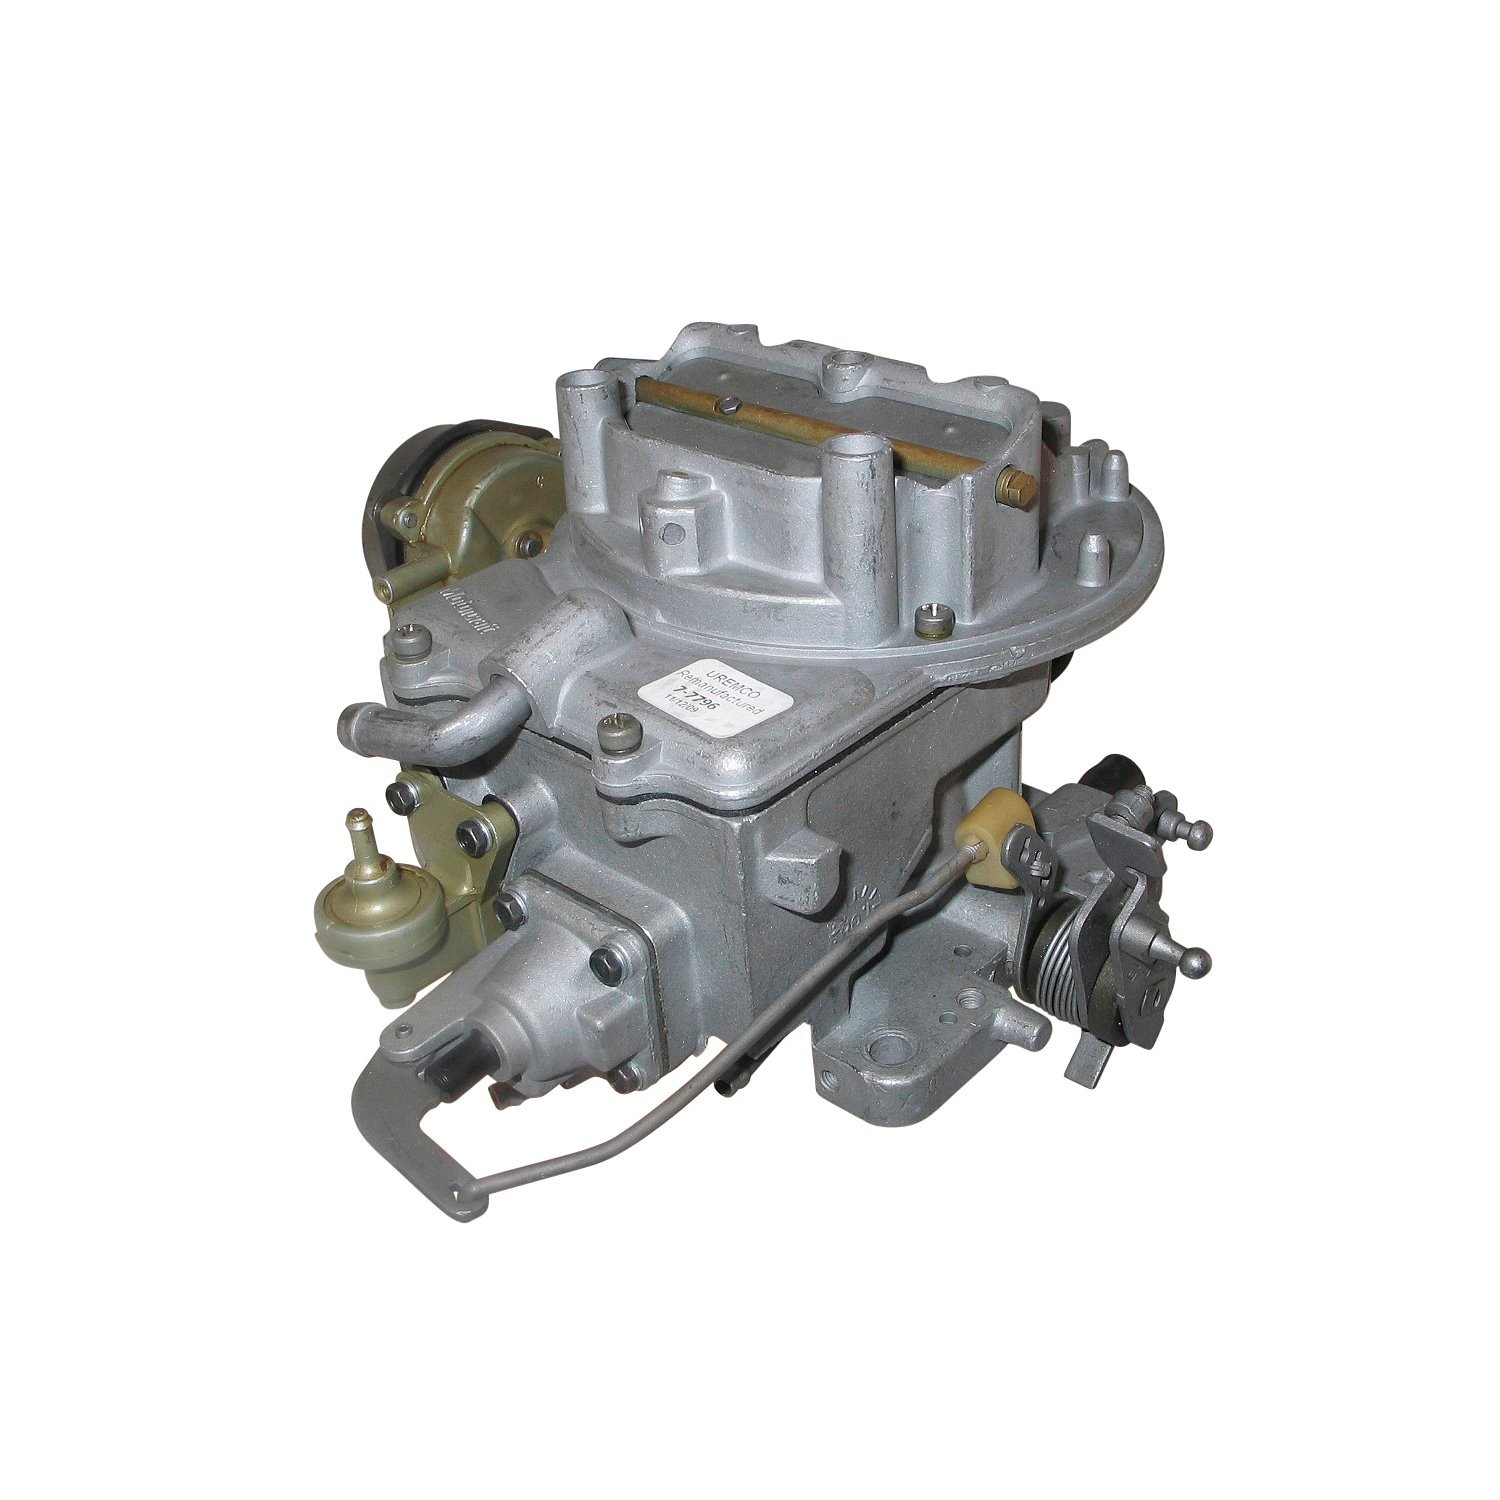 7-7796 Motorcraft Remanufactured Carburetor, 2150, w/OD-Style